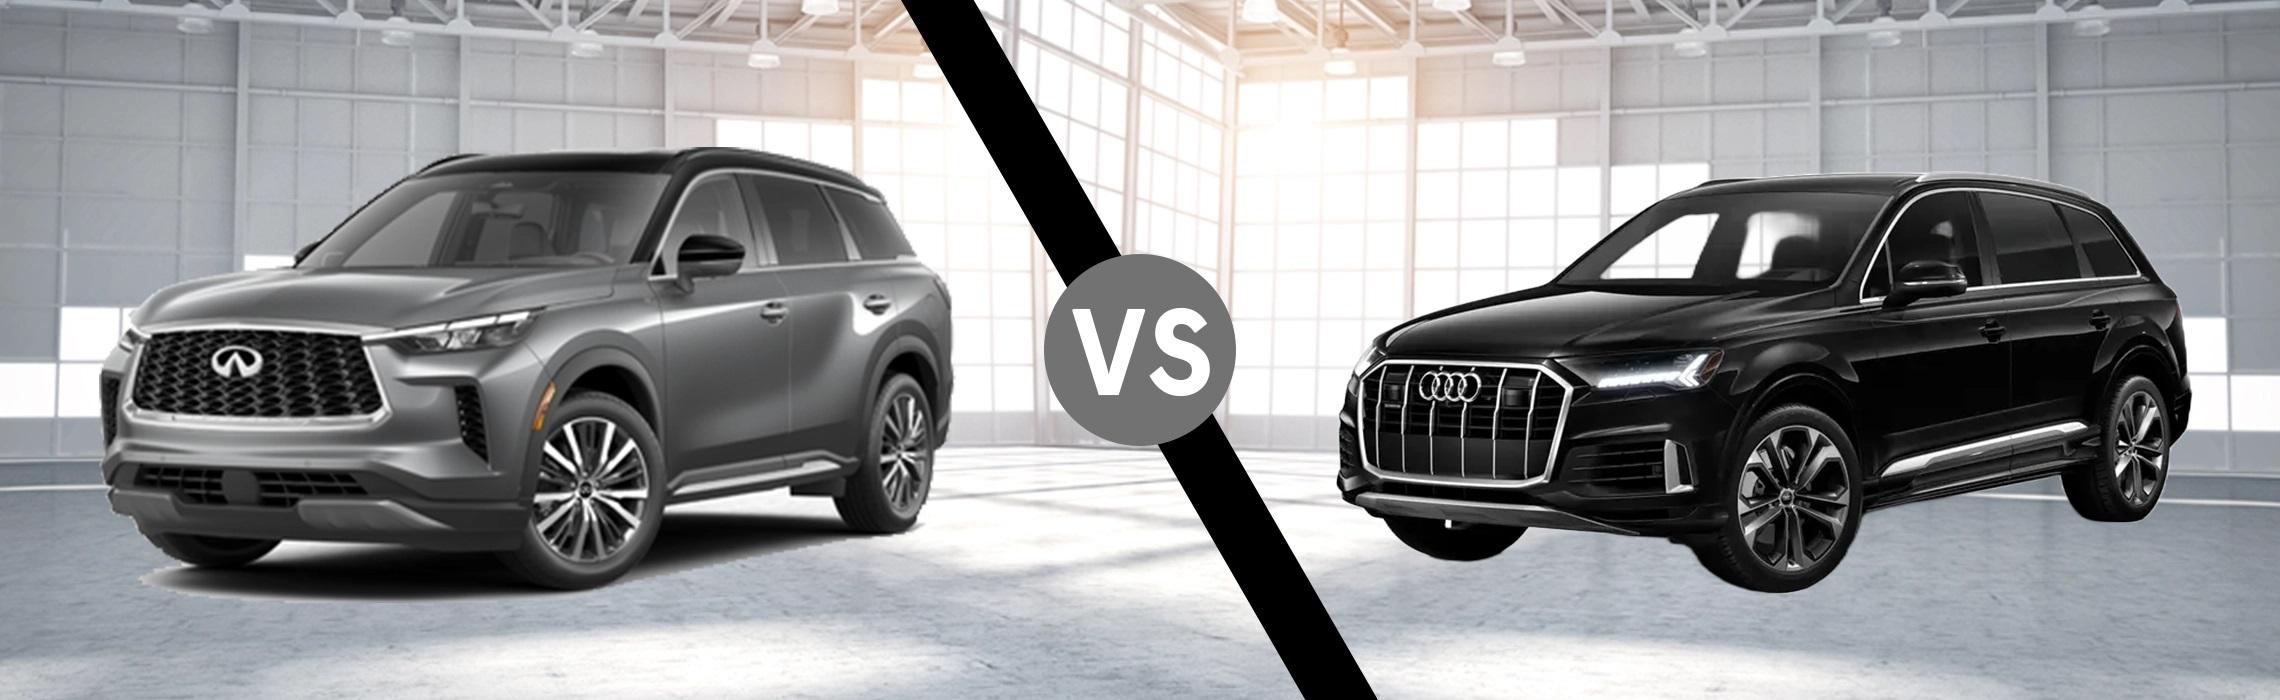 Compared: 2023 Audi Q5 vs. 2023 Audi Q7